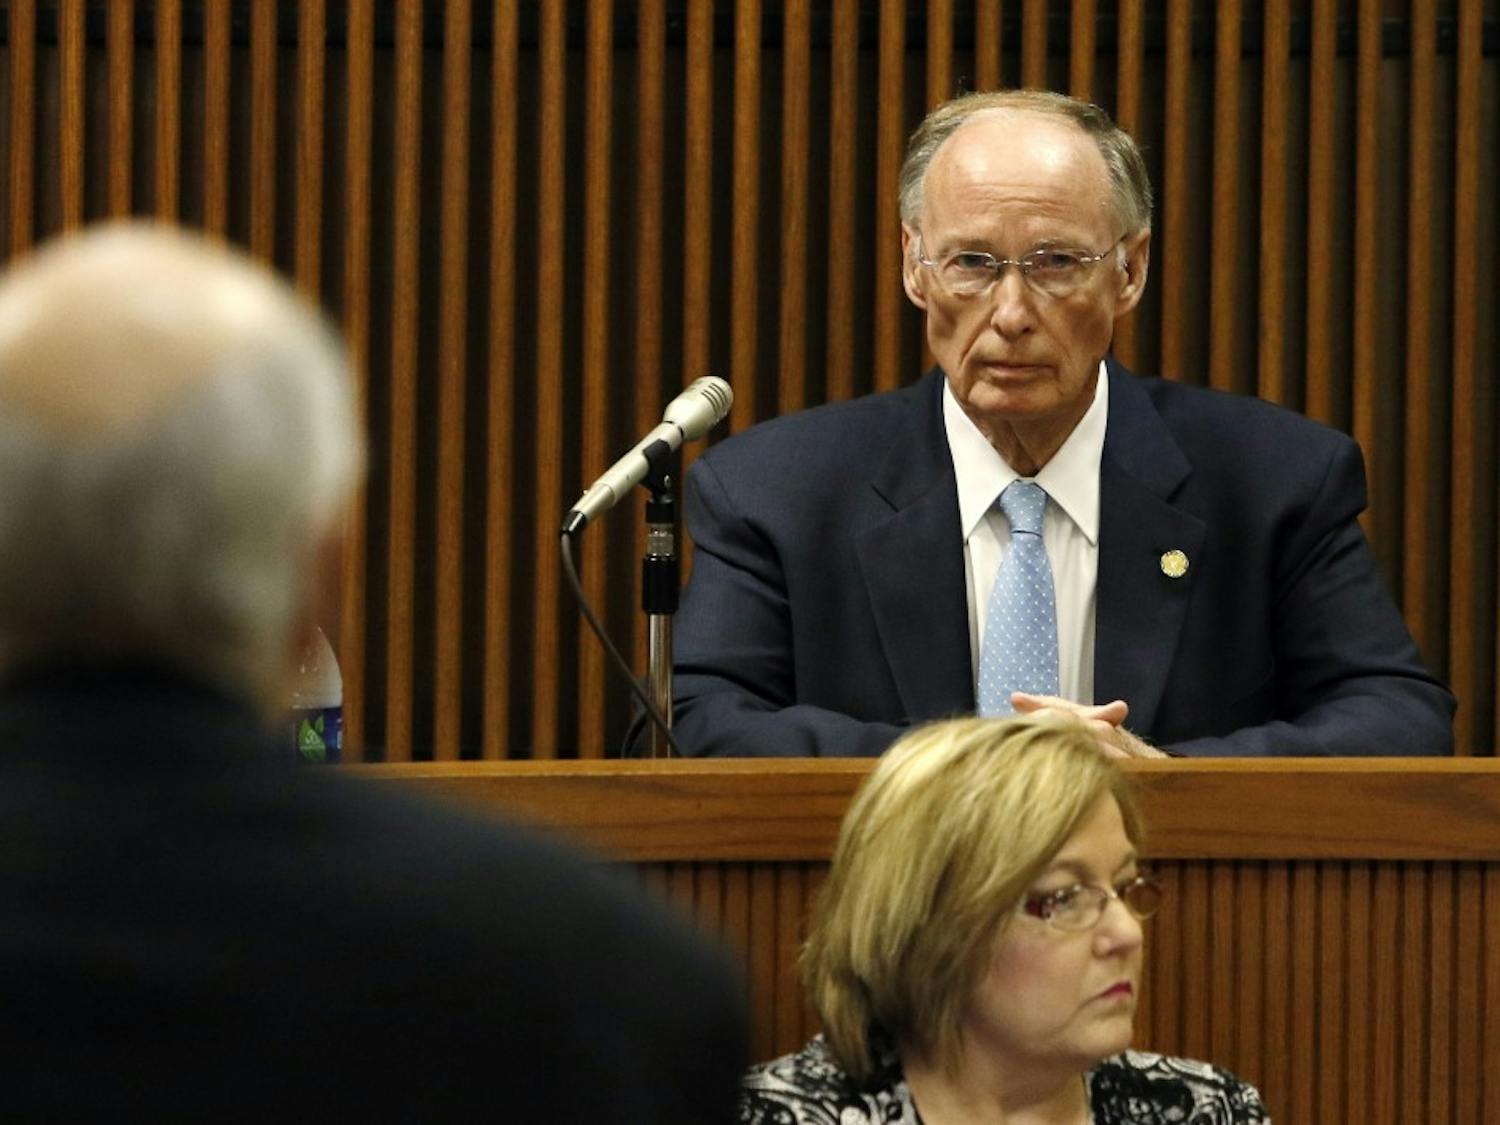 Prosecutor John Gibbs questions Alabama Governor Robert Bentley in the
Alabama Speaker Mike Hubbard trial on Wednesday, June 1, 2016  in Opelika, Ala.
Todd J. Van Emst/Opelika-Auburn News/Pool